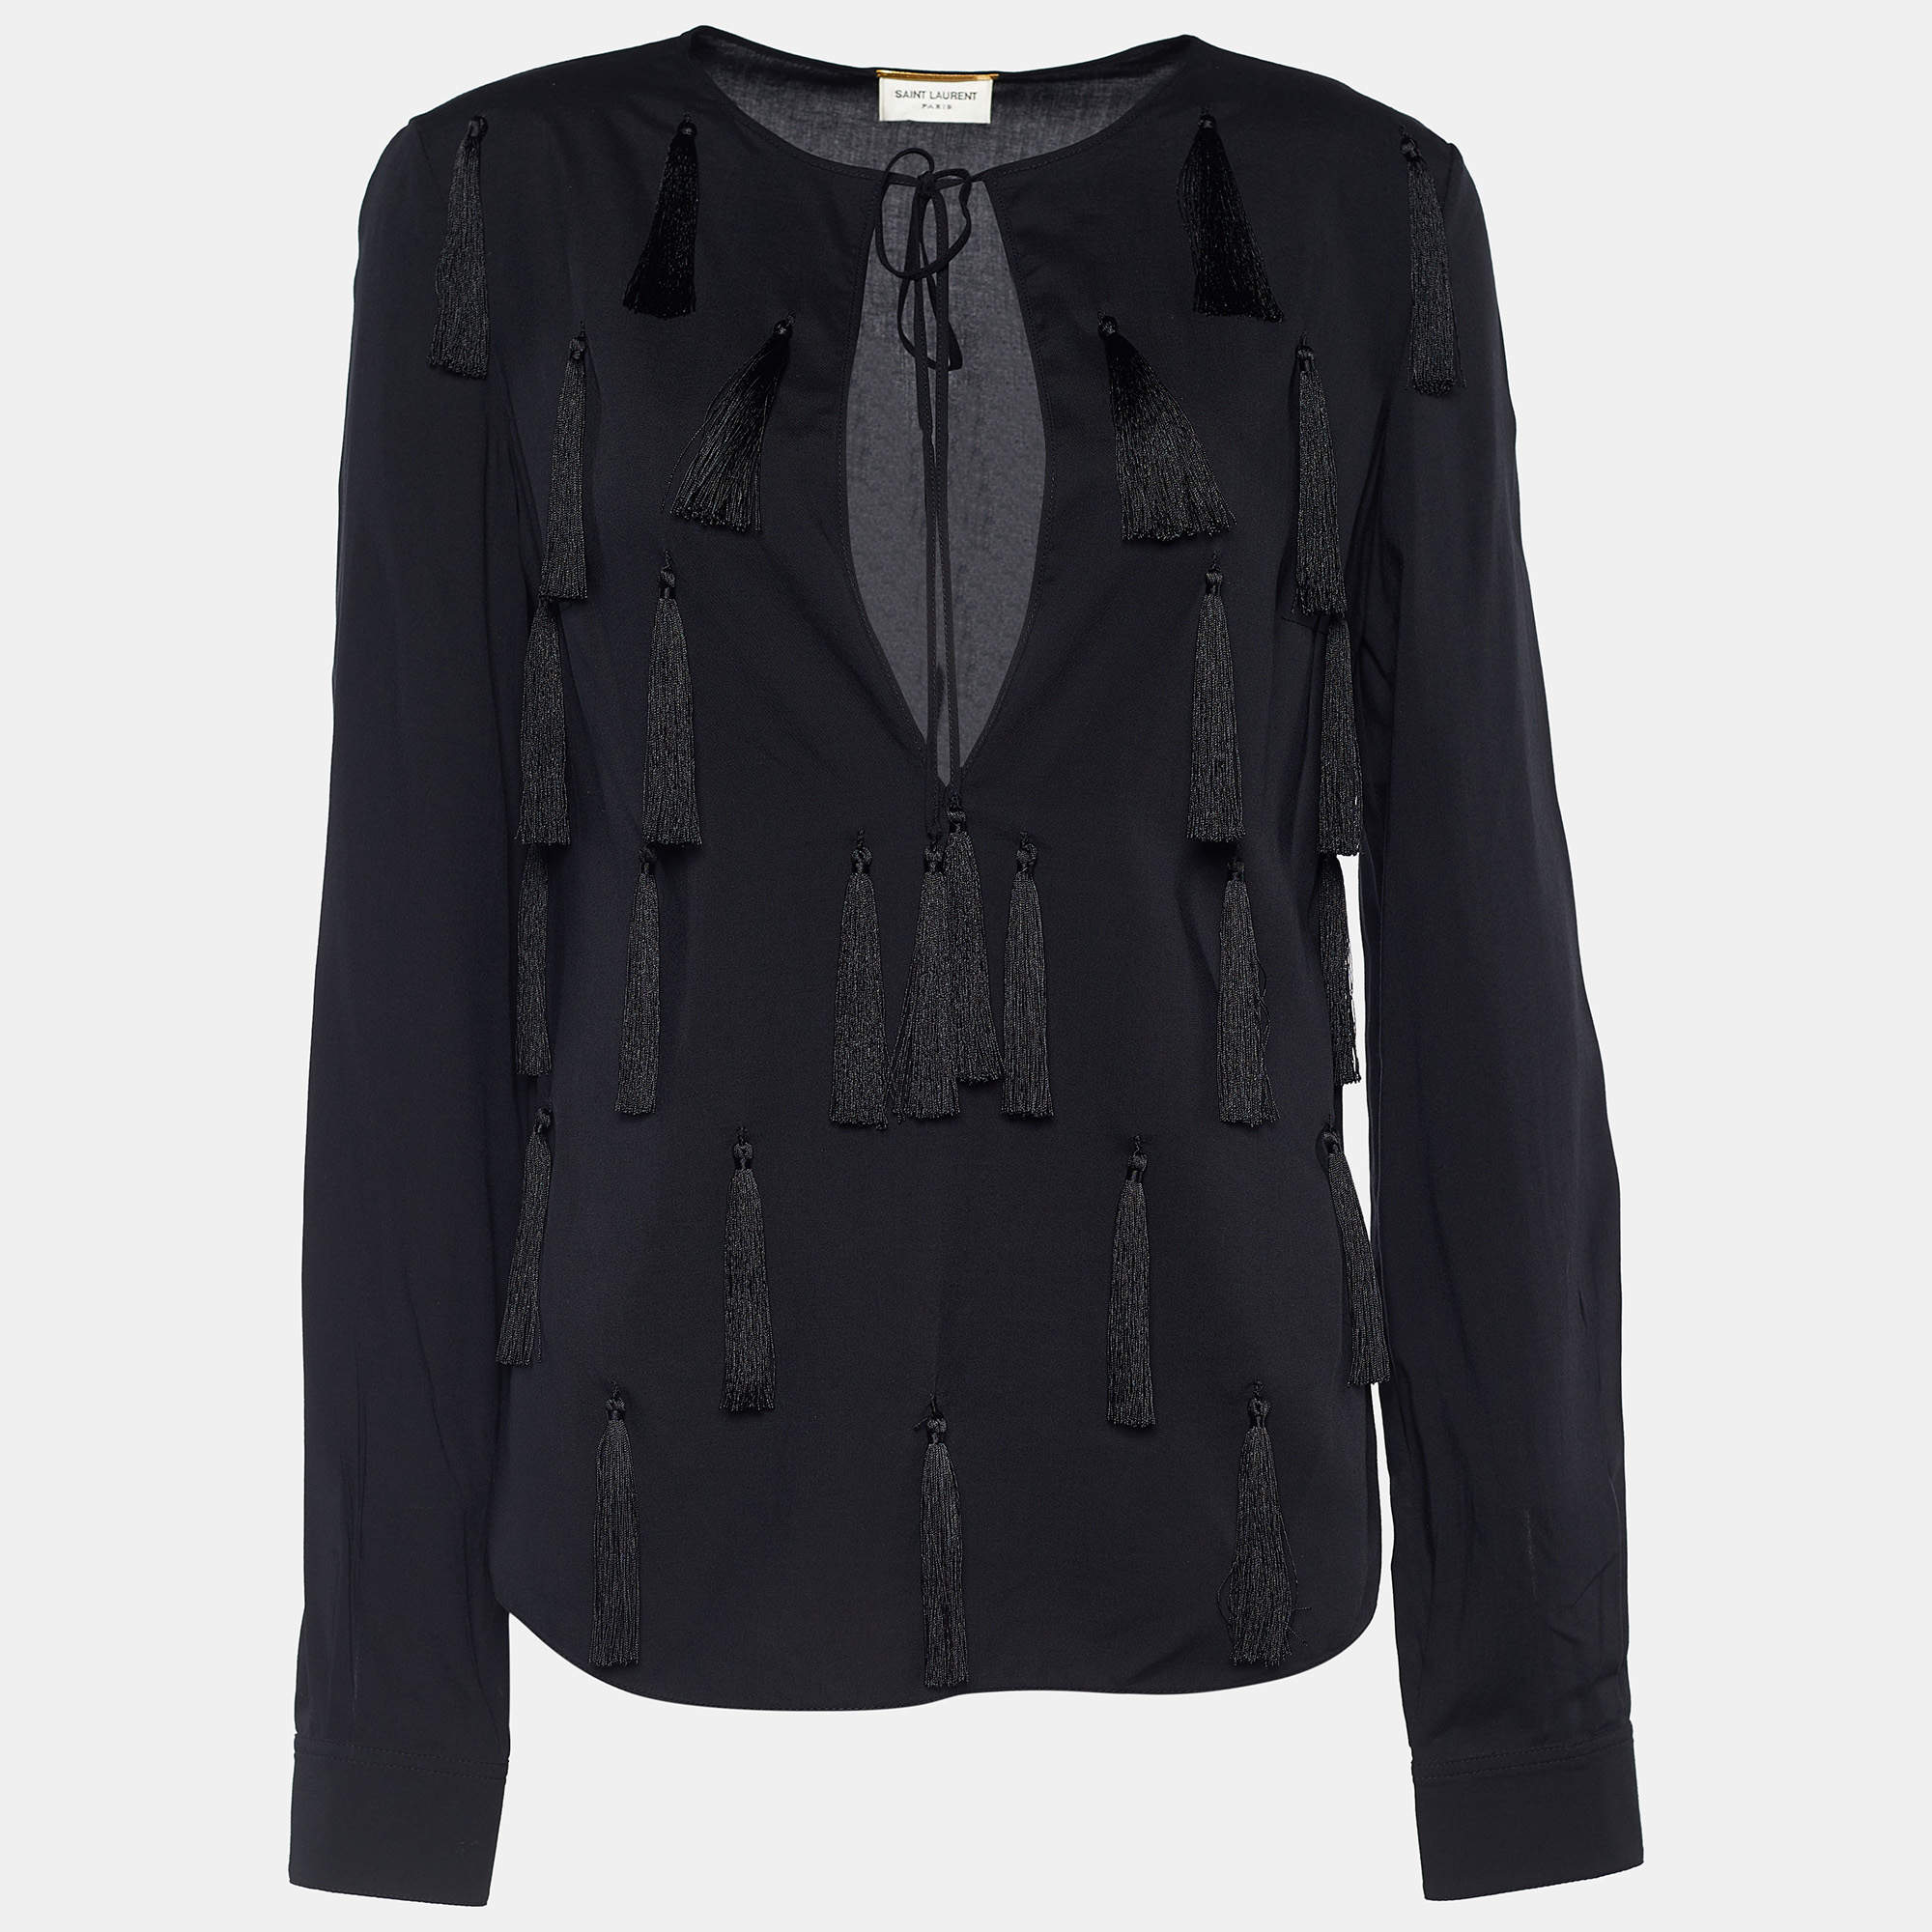 Saint Laurent Paris Black Tassel Embellished Long Sleeve Top S